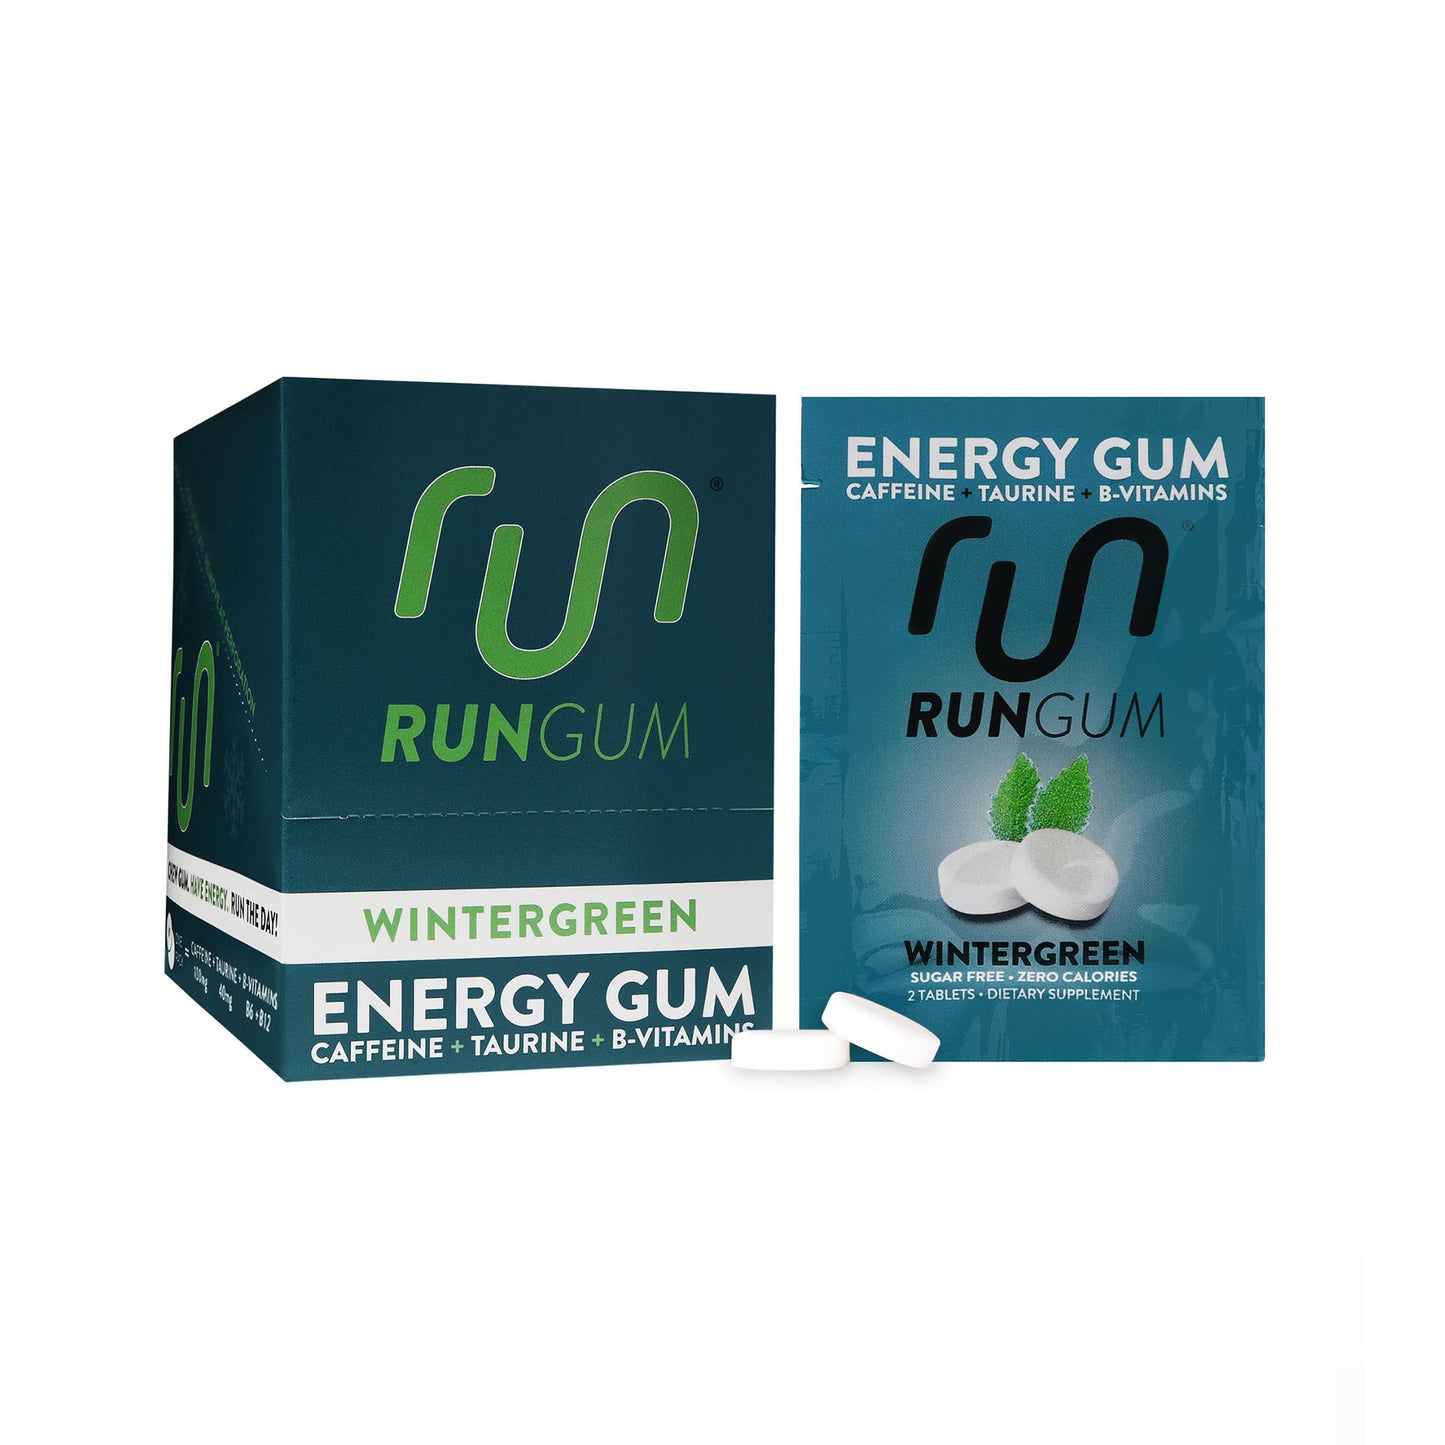 Wintergreen Energy Gum